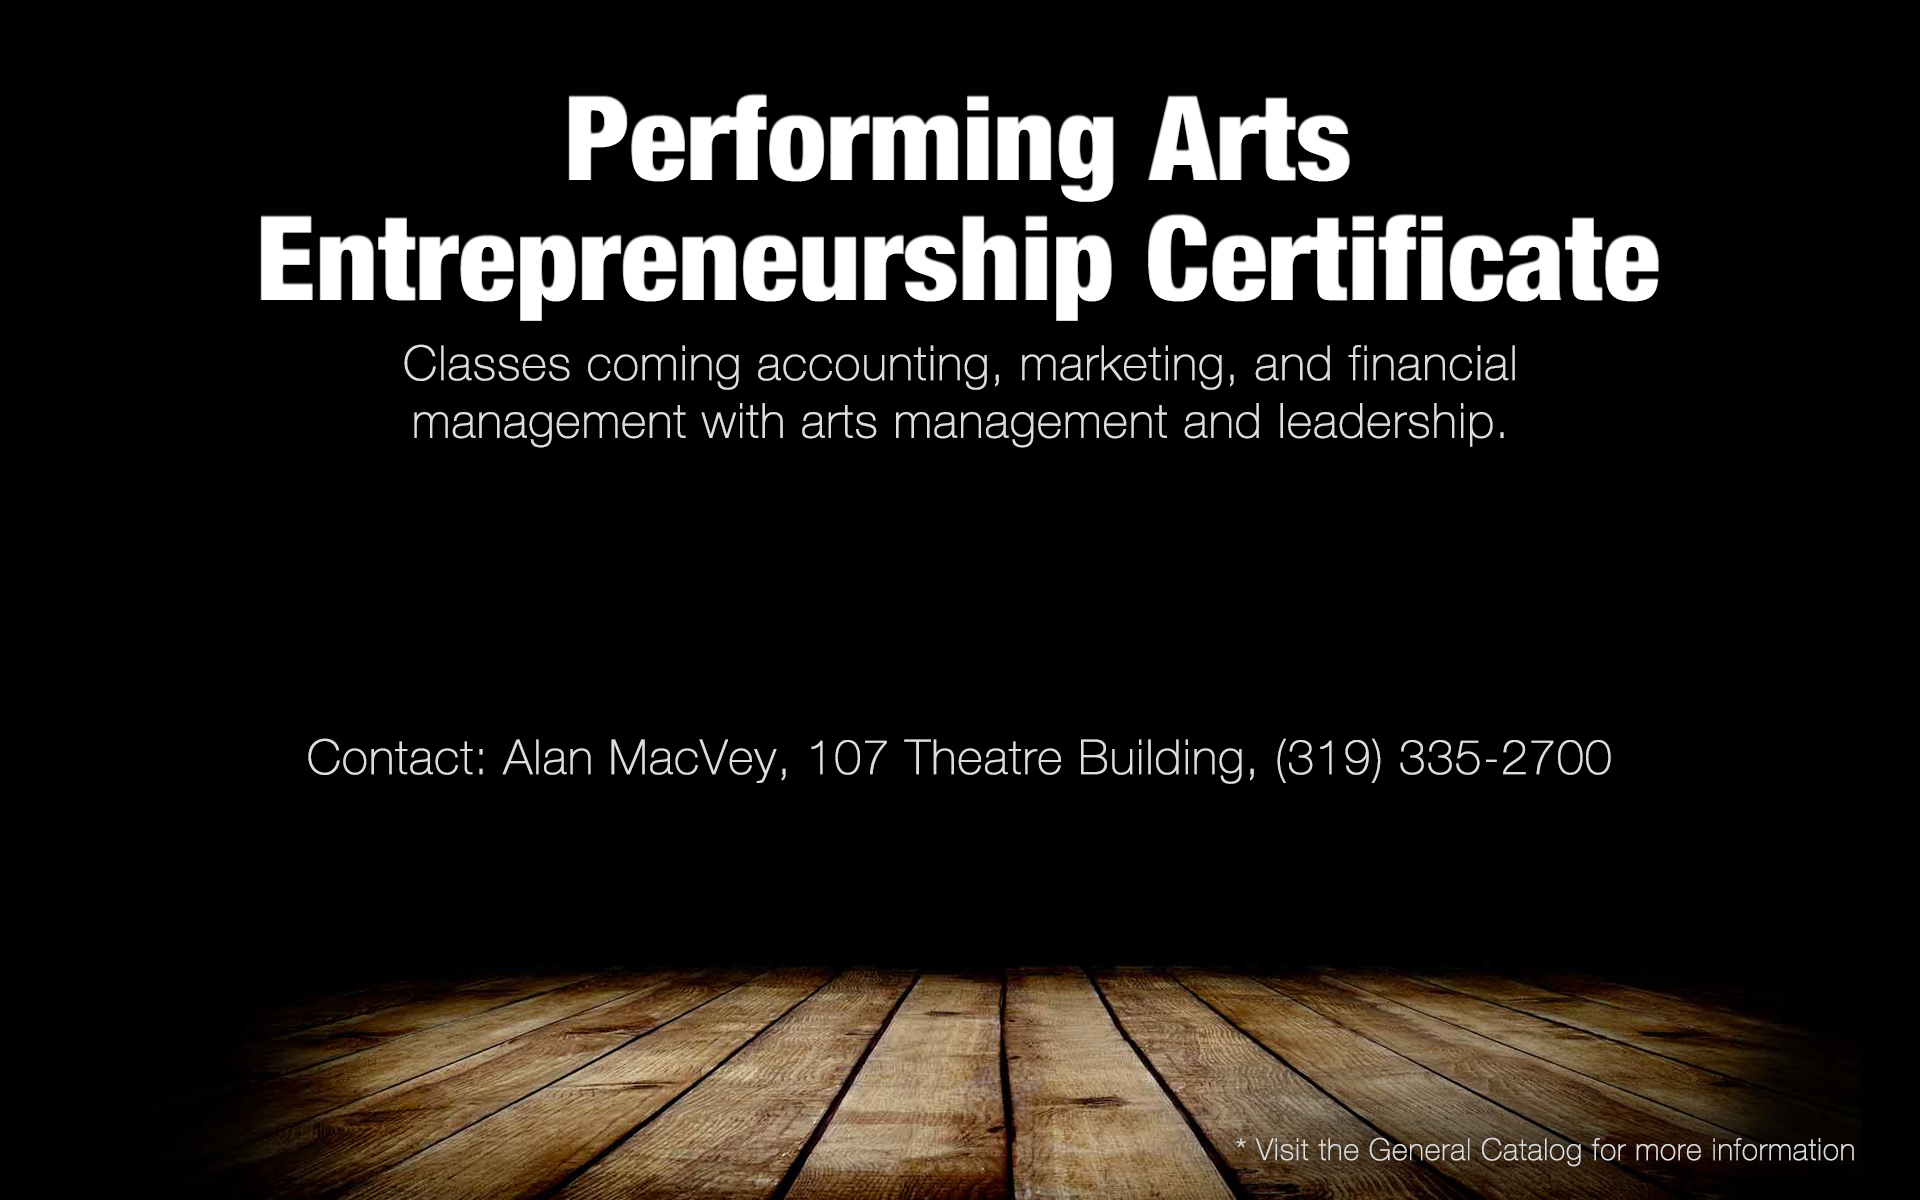 Performing Arts Entrepeneurship Certificate